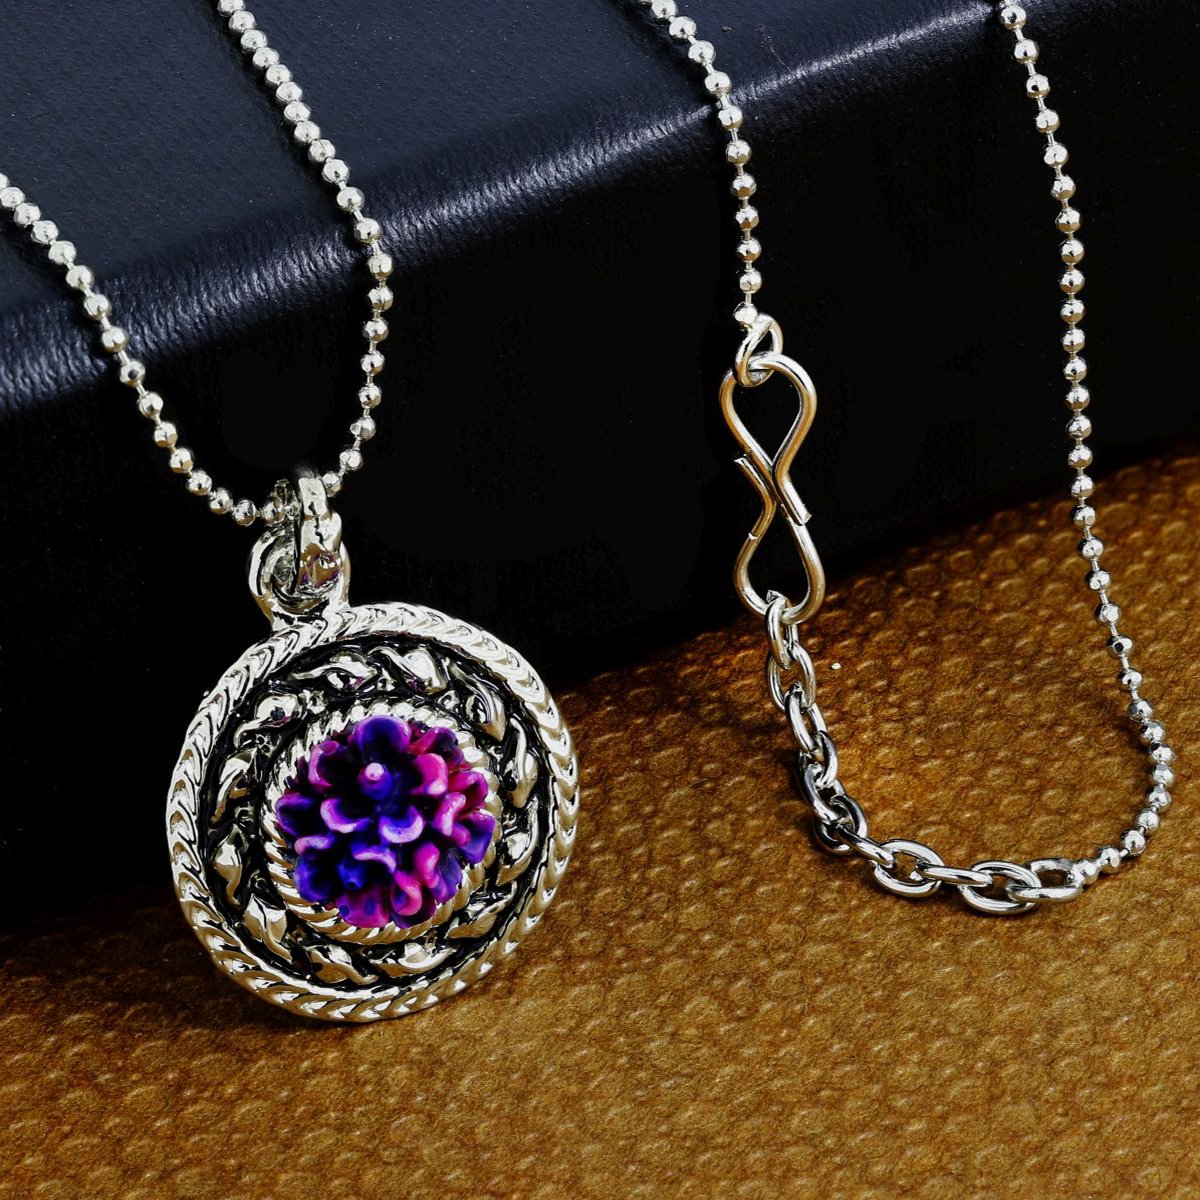 Buy Purple Beaded Necklace with Elephant Pendant Online